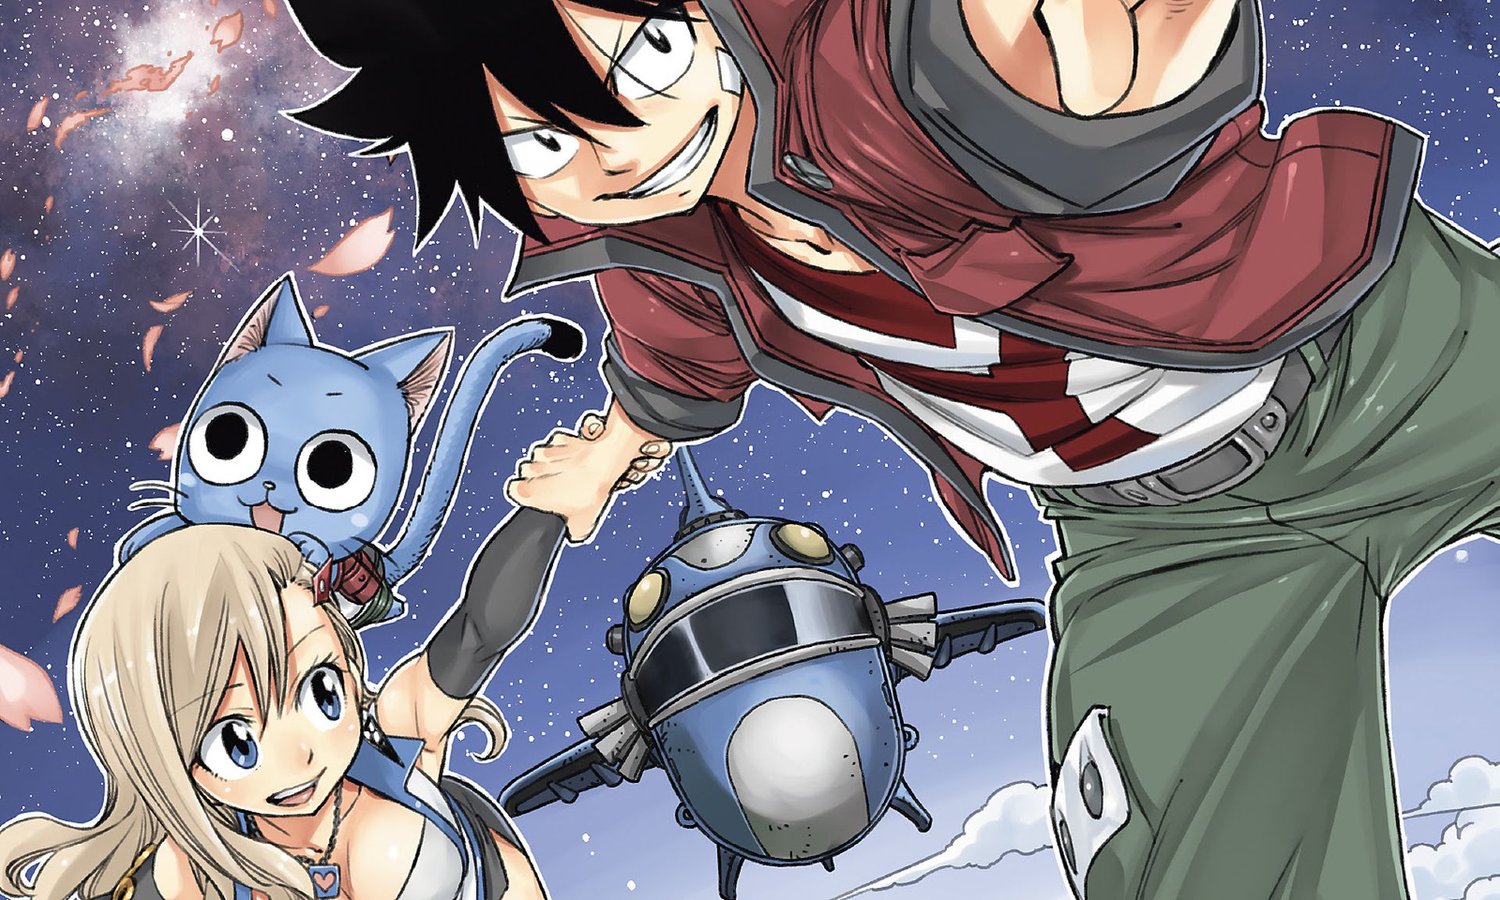 Fairy Tail Creator Hiro Mashima's Edens Zero To Get Anime Adaptation,  Release Date Announced - Bounding Into Comics